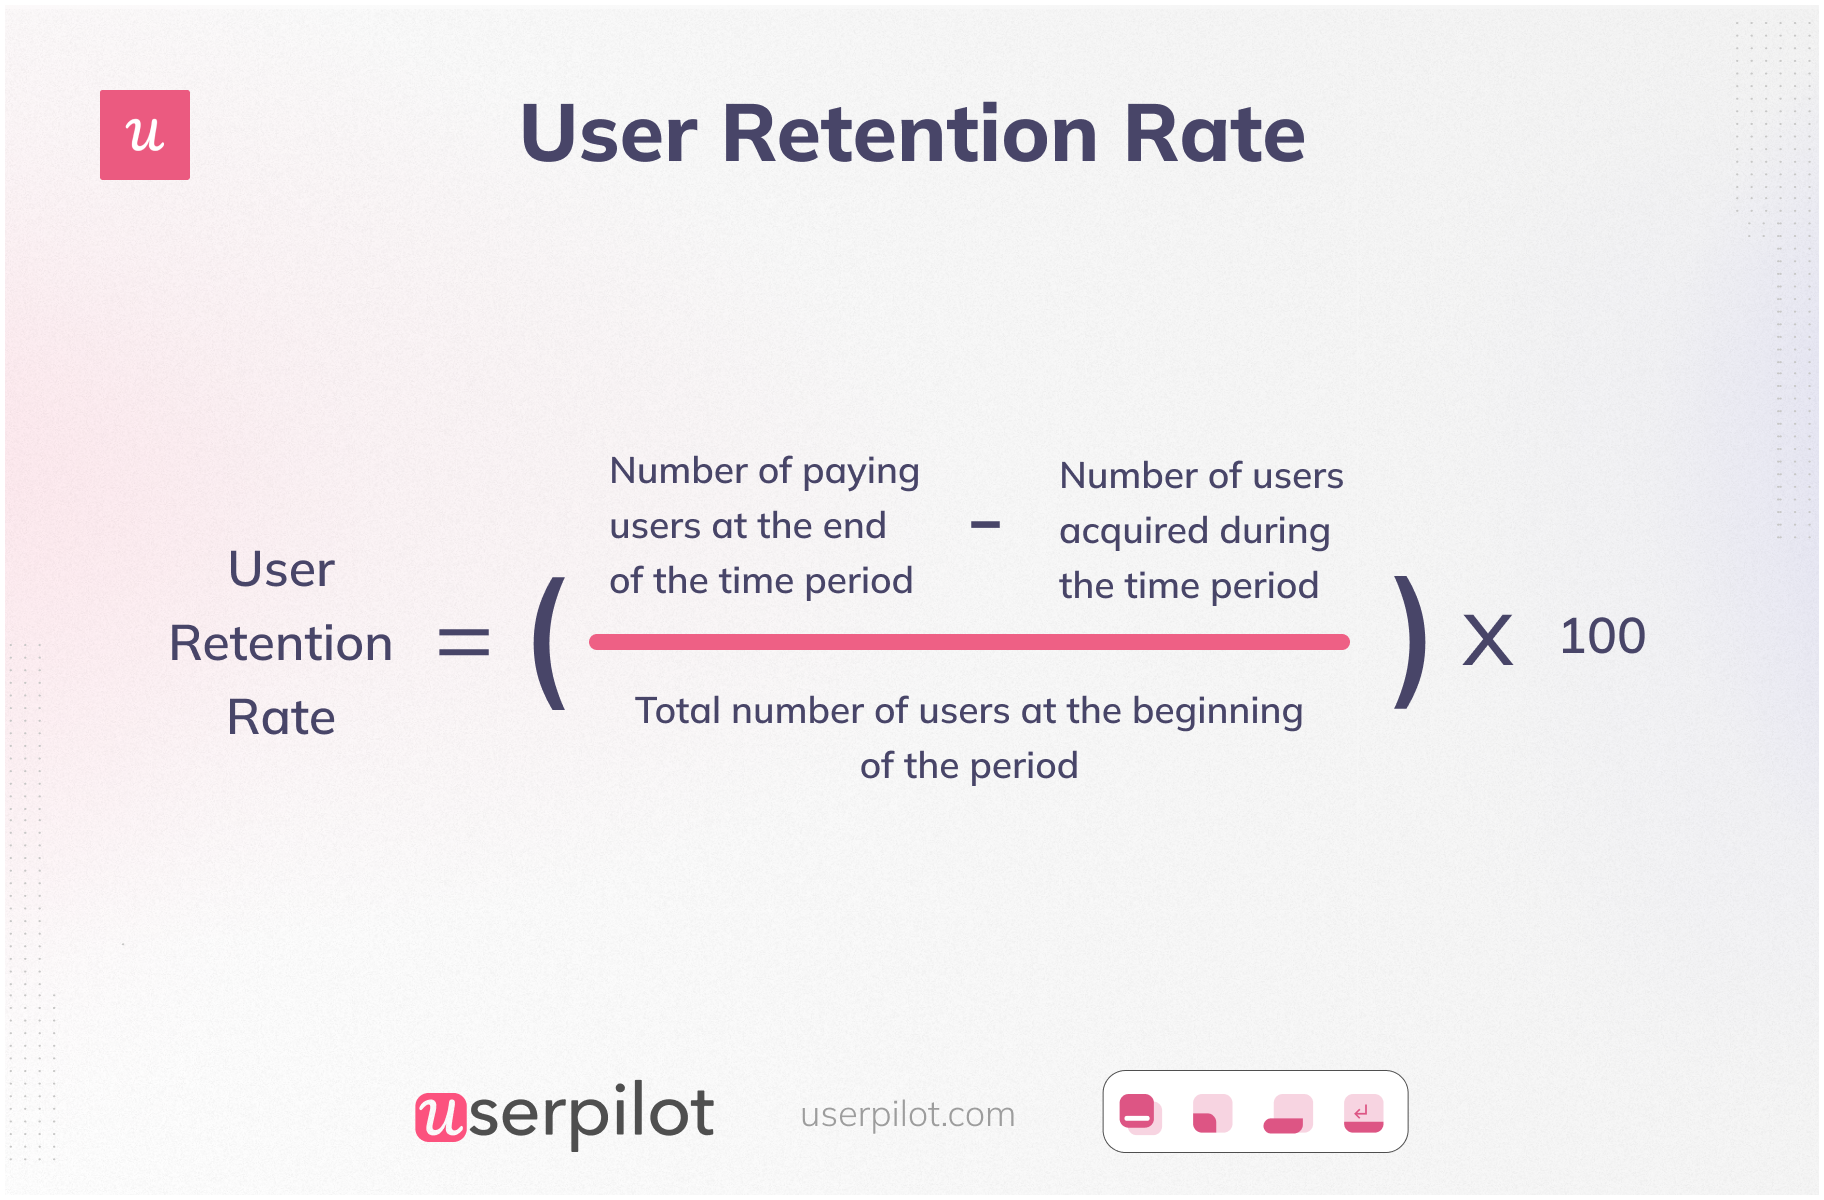 Customer retention rate